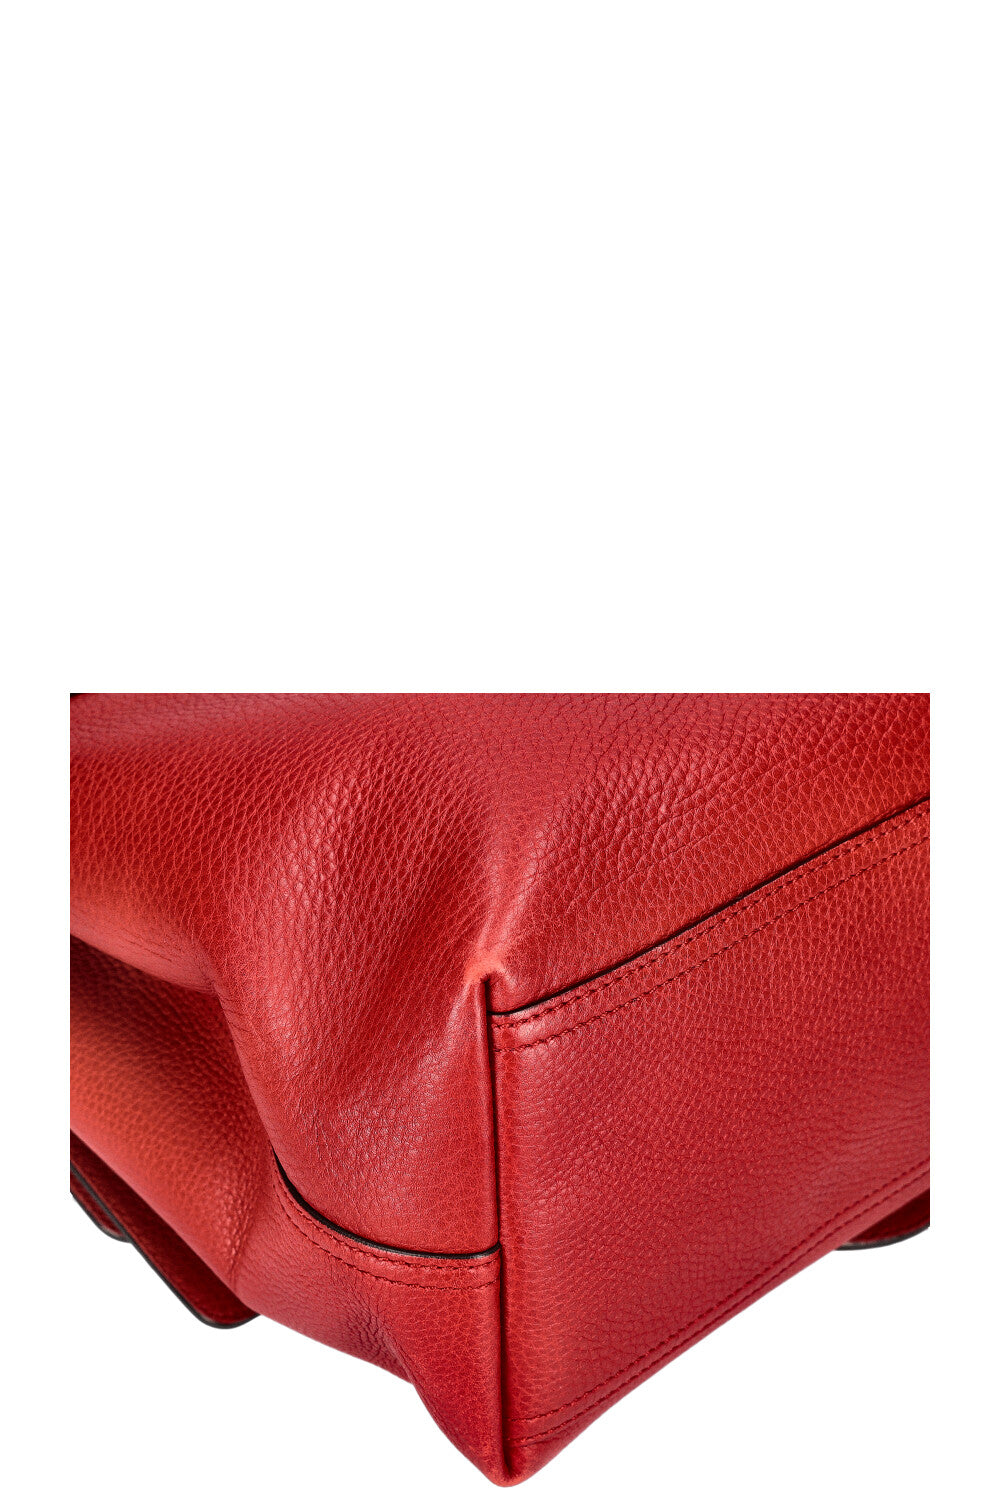 GUCCI GG Marmont Shoulder Bag Red